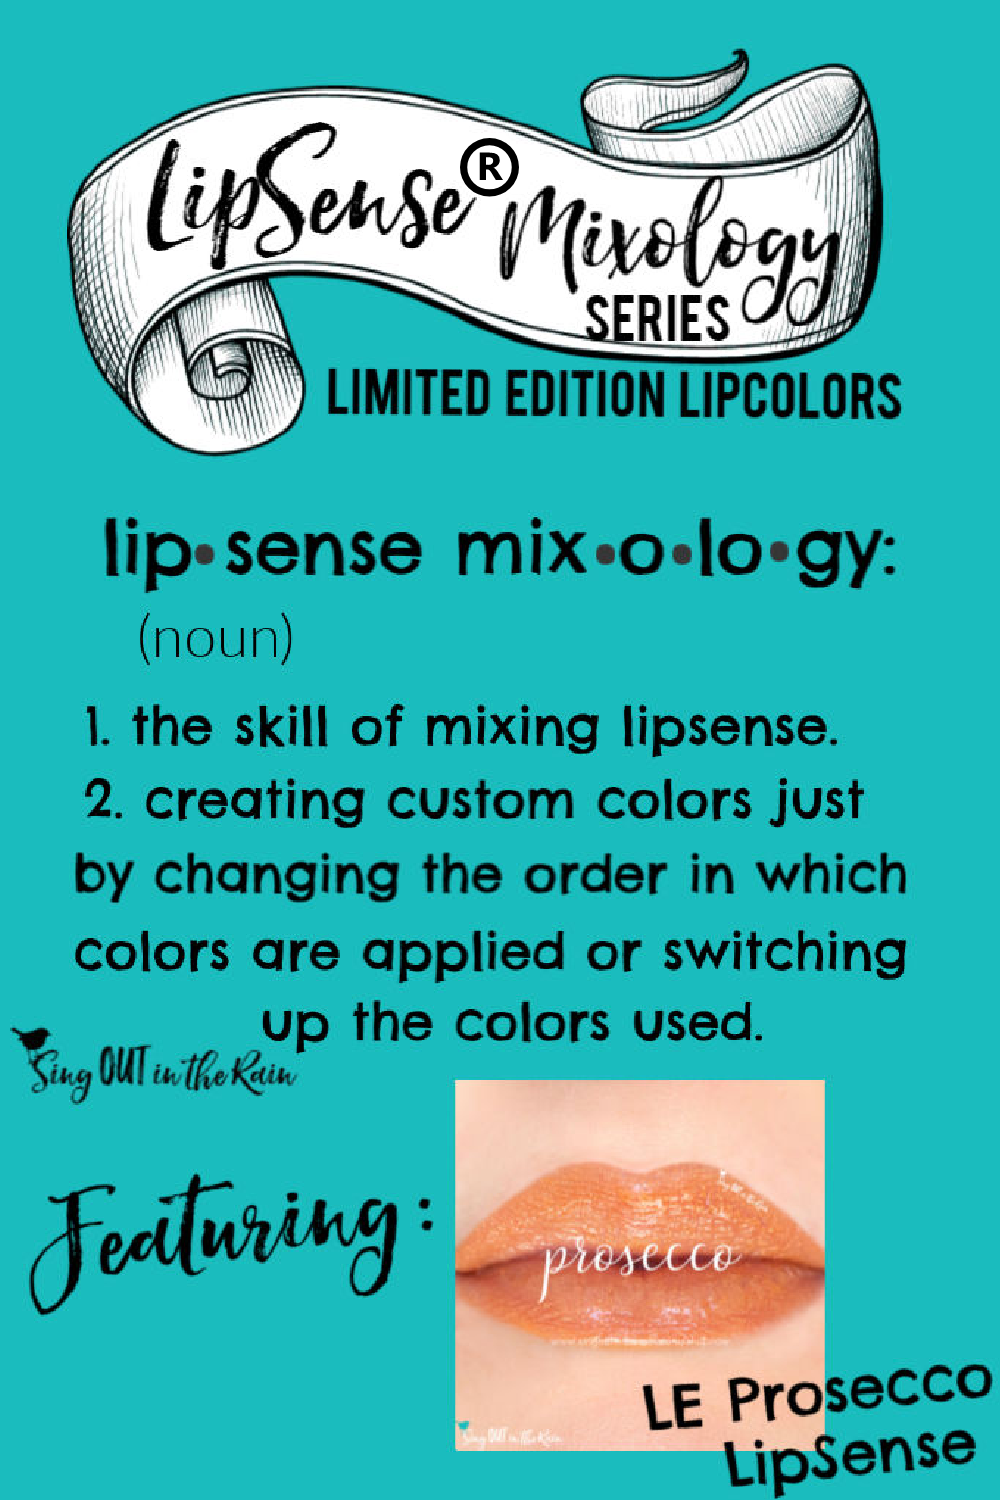 The Ultimate Guide to Prosecco LipSense Mixology